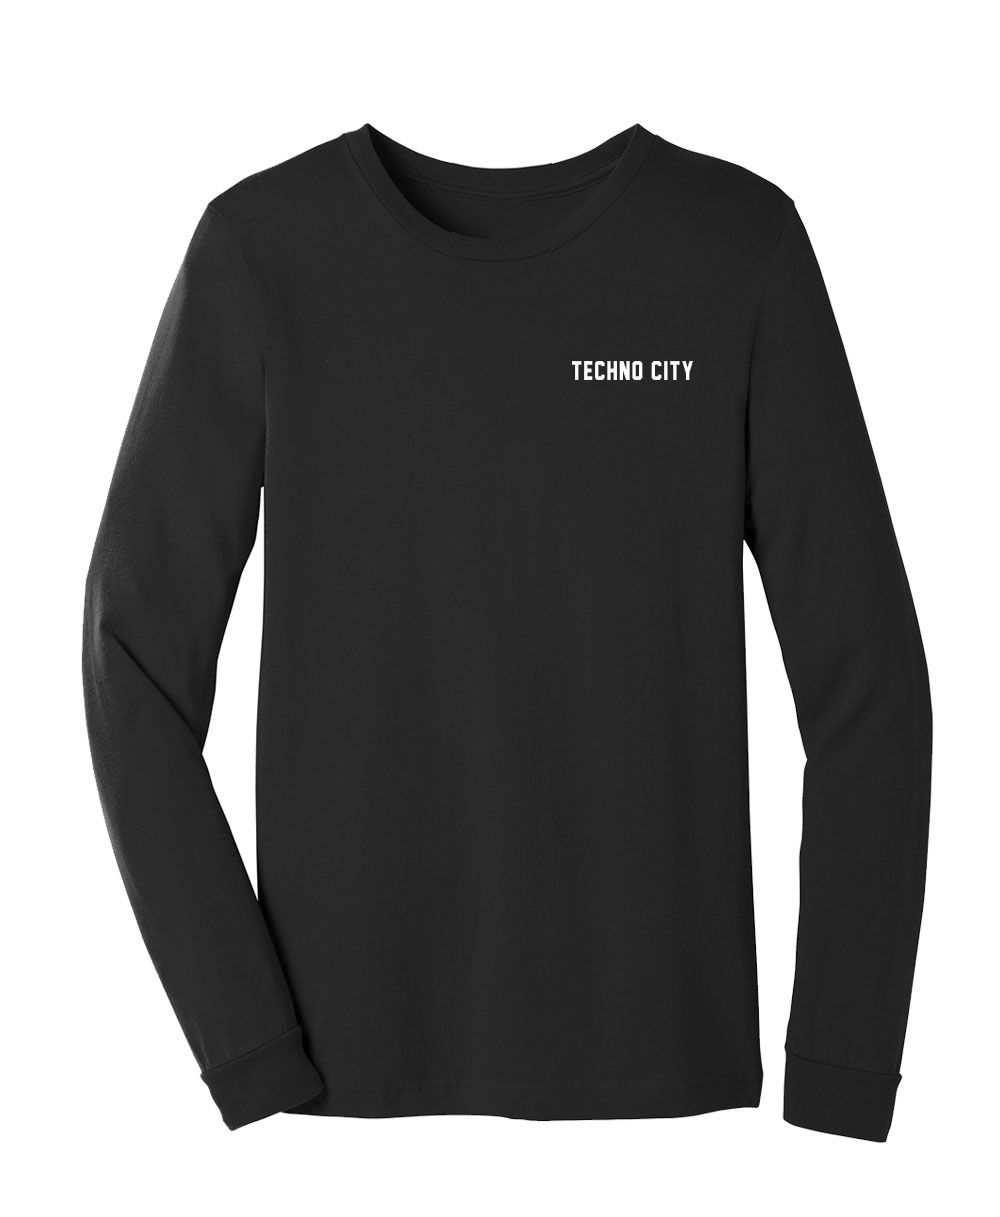 Techno City Long-Sleeve Shirt